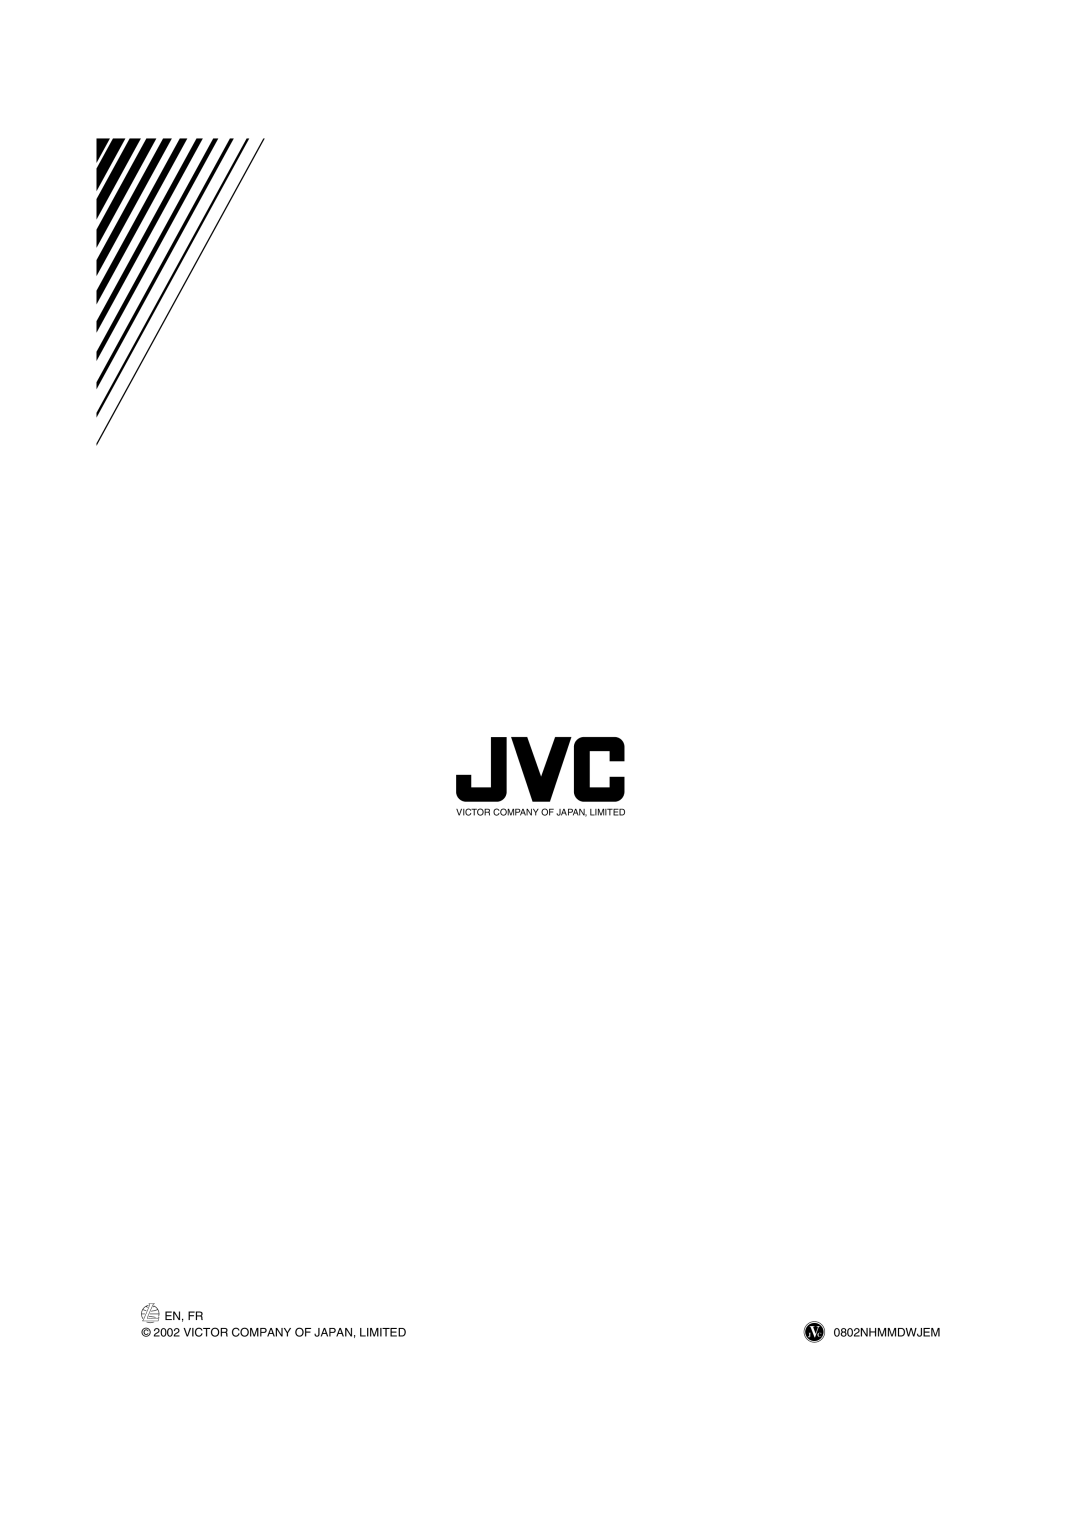 JVC RX-DV5SL manual En, Fr, Victor Company Of Japan, Limited, 0802NHMMDWJEM 